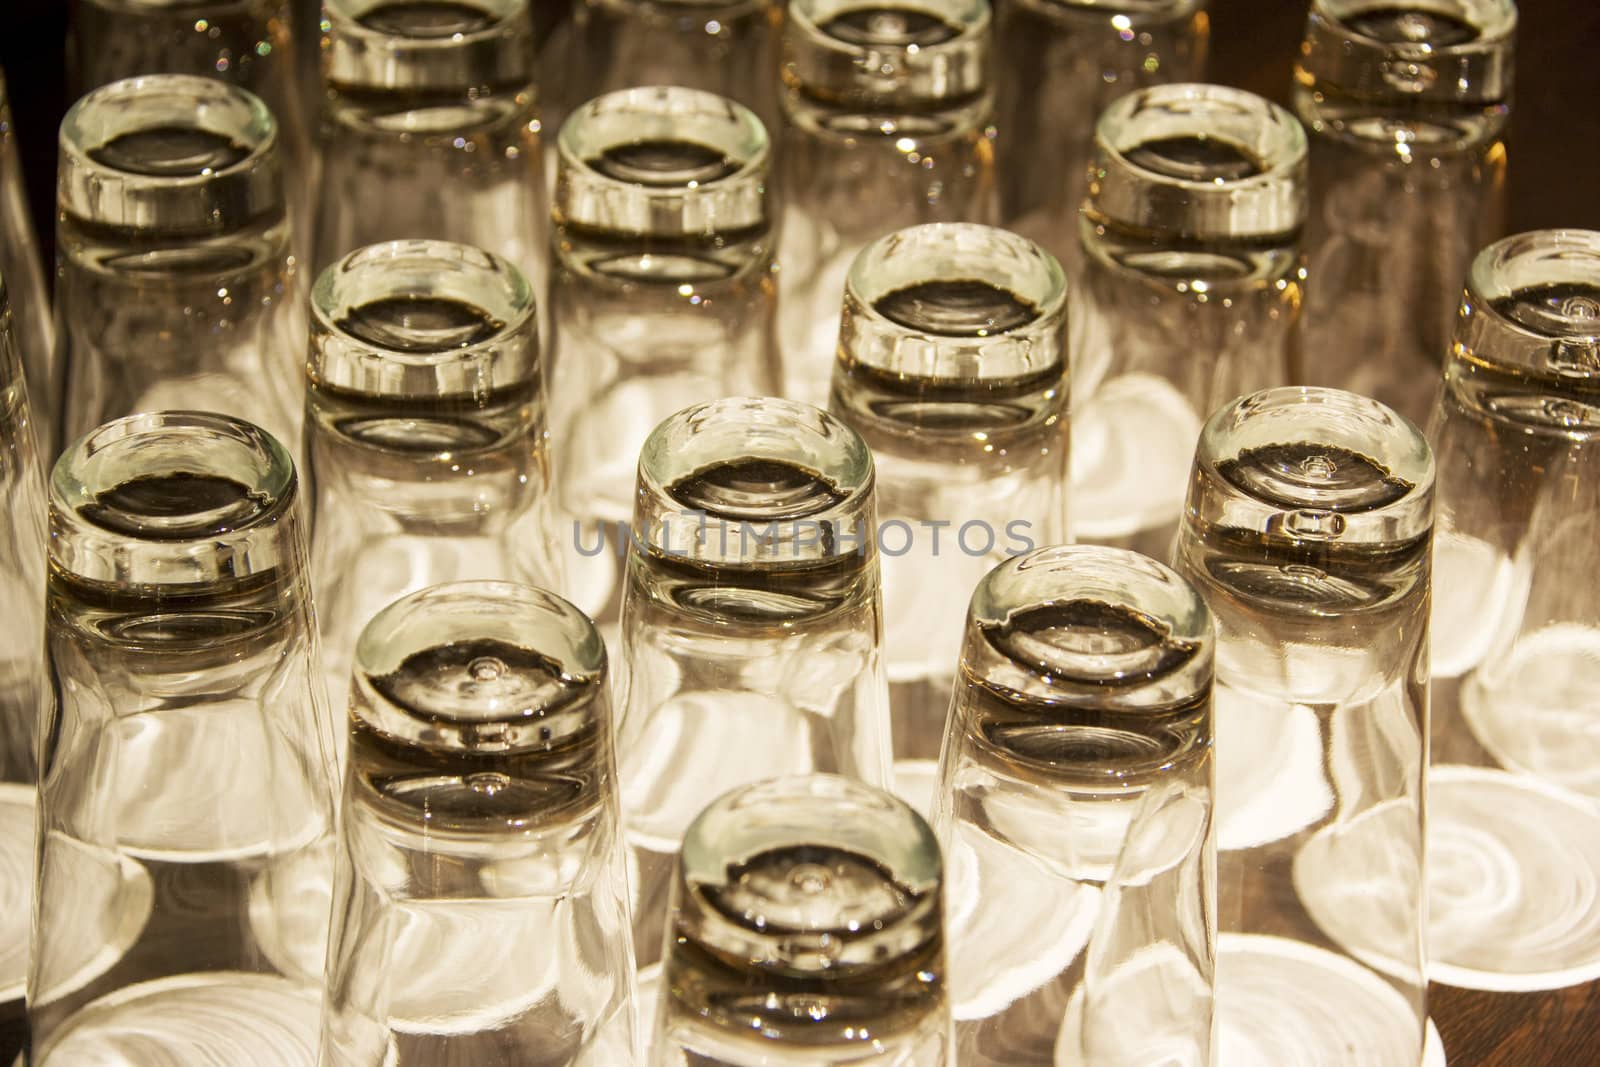 Image of arranged drinking glasses.
